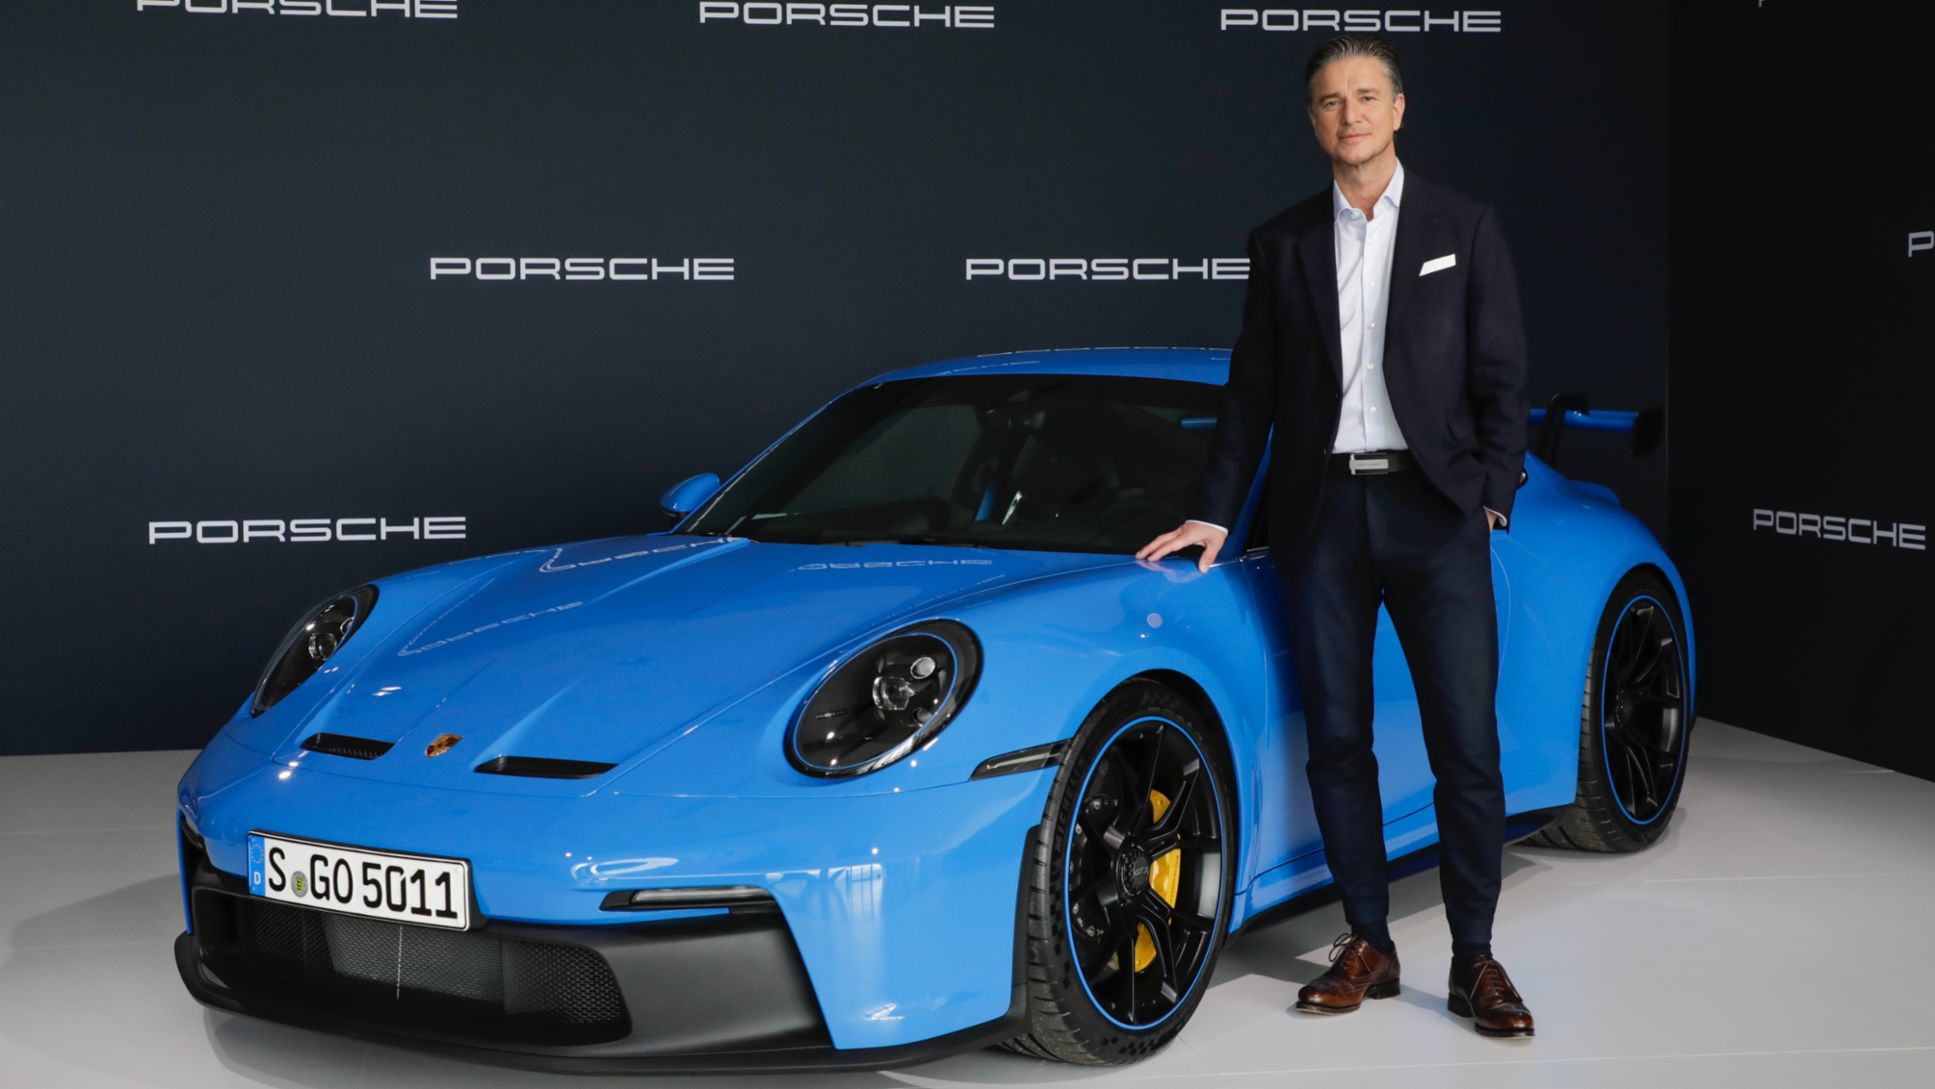 Lutz Meschke, Vicepresidente y miembro del Consejo de Dirección de Porsche AG como responsable de Finanzas y Tecnologías de la Información, conferencia de prensa anual, 2021, Porsche AG